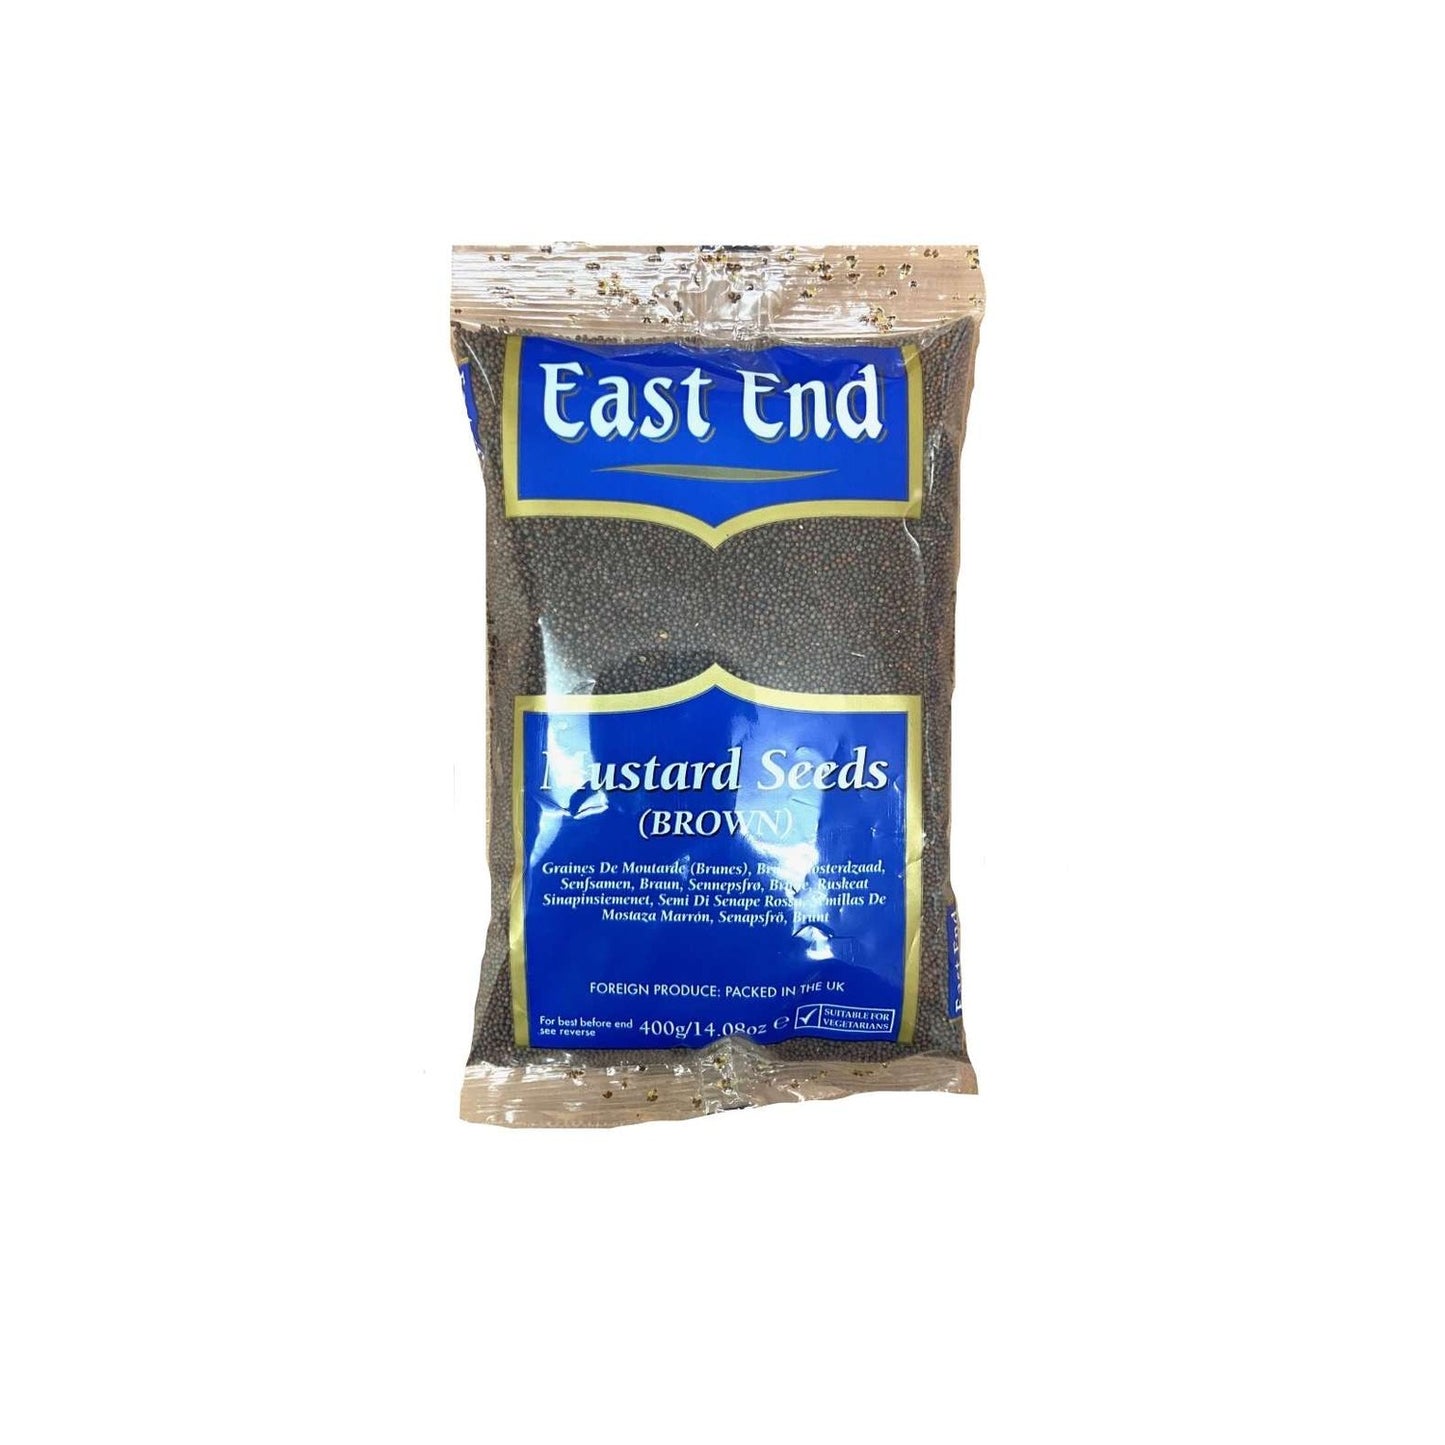 East End Mustard Seeds (Brown Rai) 400g